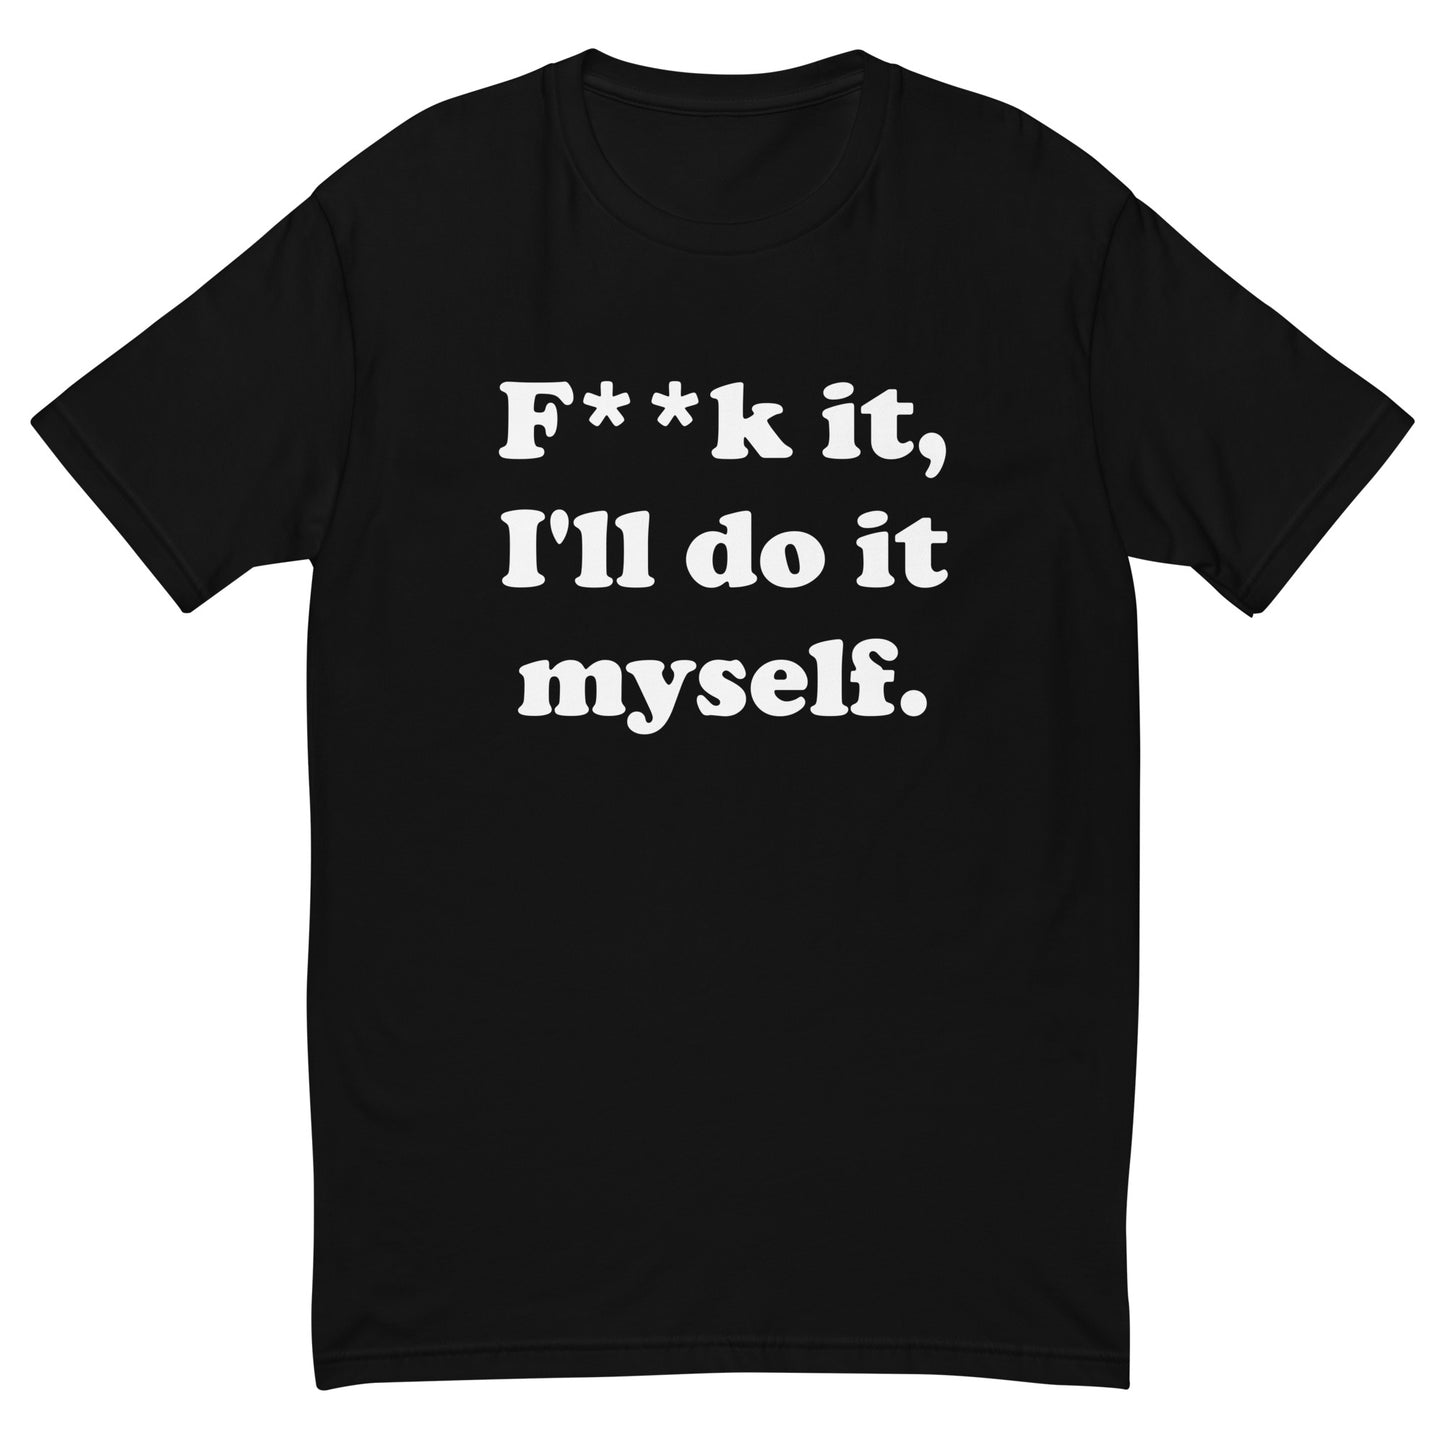 F**k it, I'll do it myself men's T-shirt